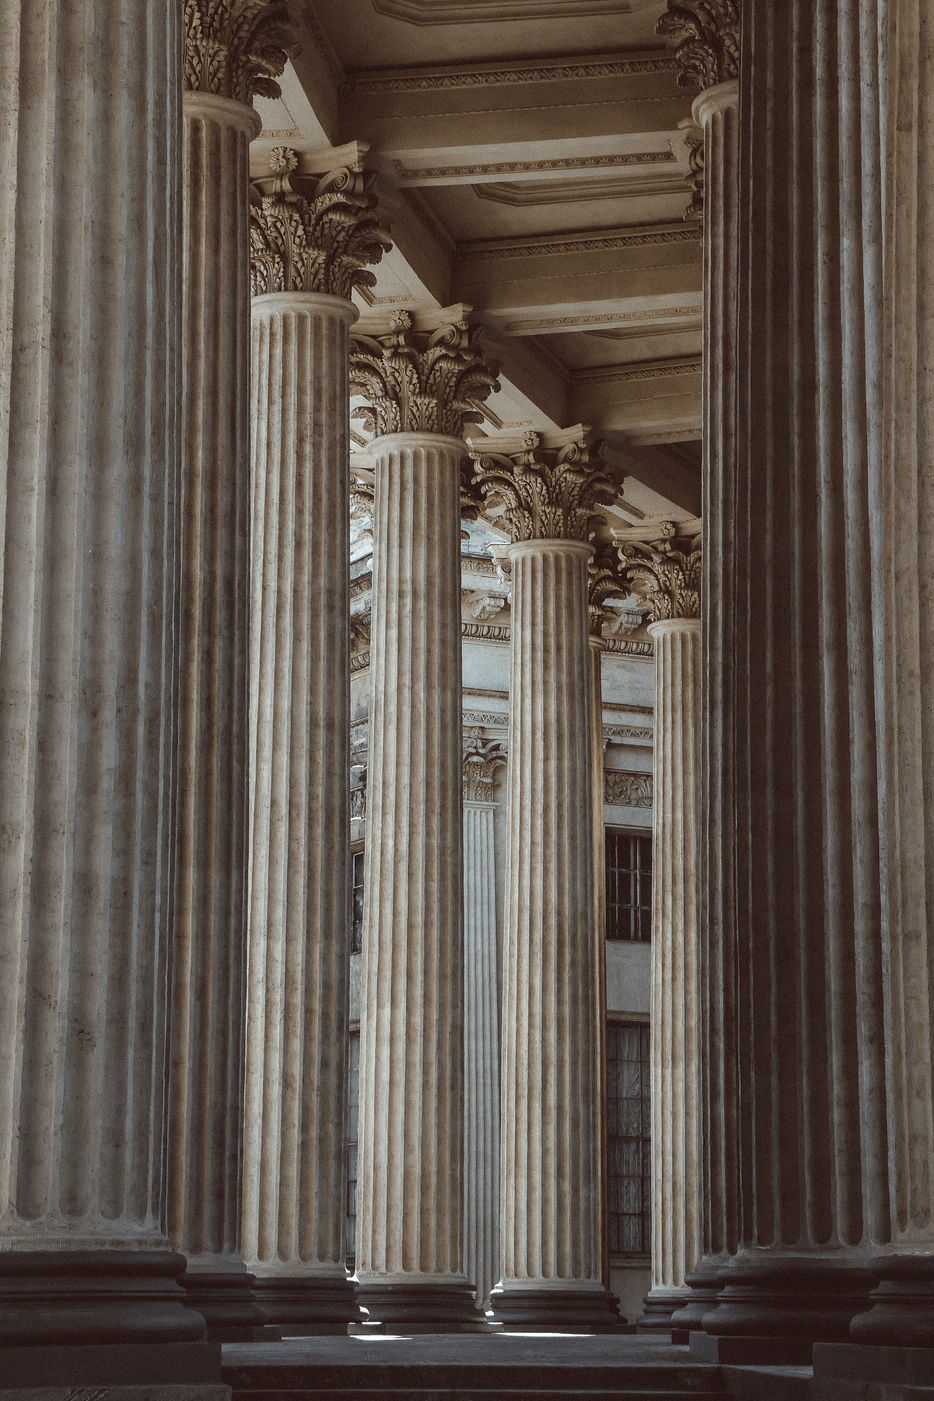 A row of columns in a building. - Light academia